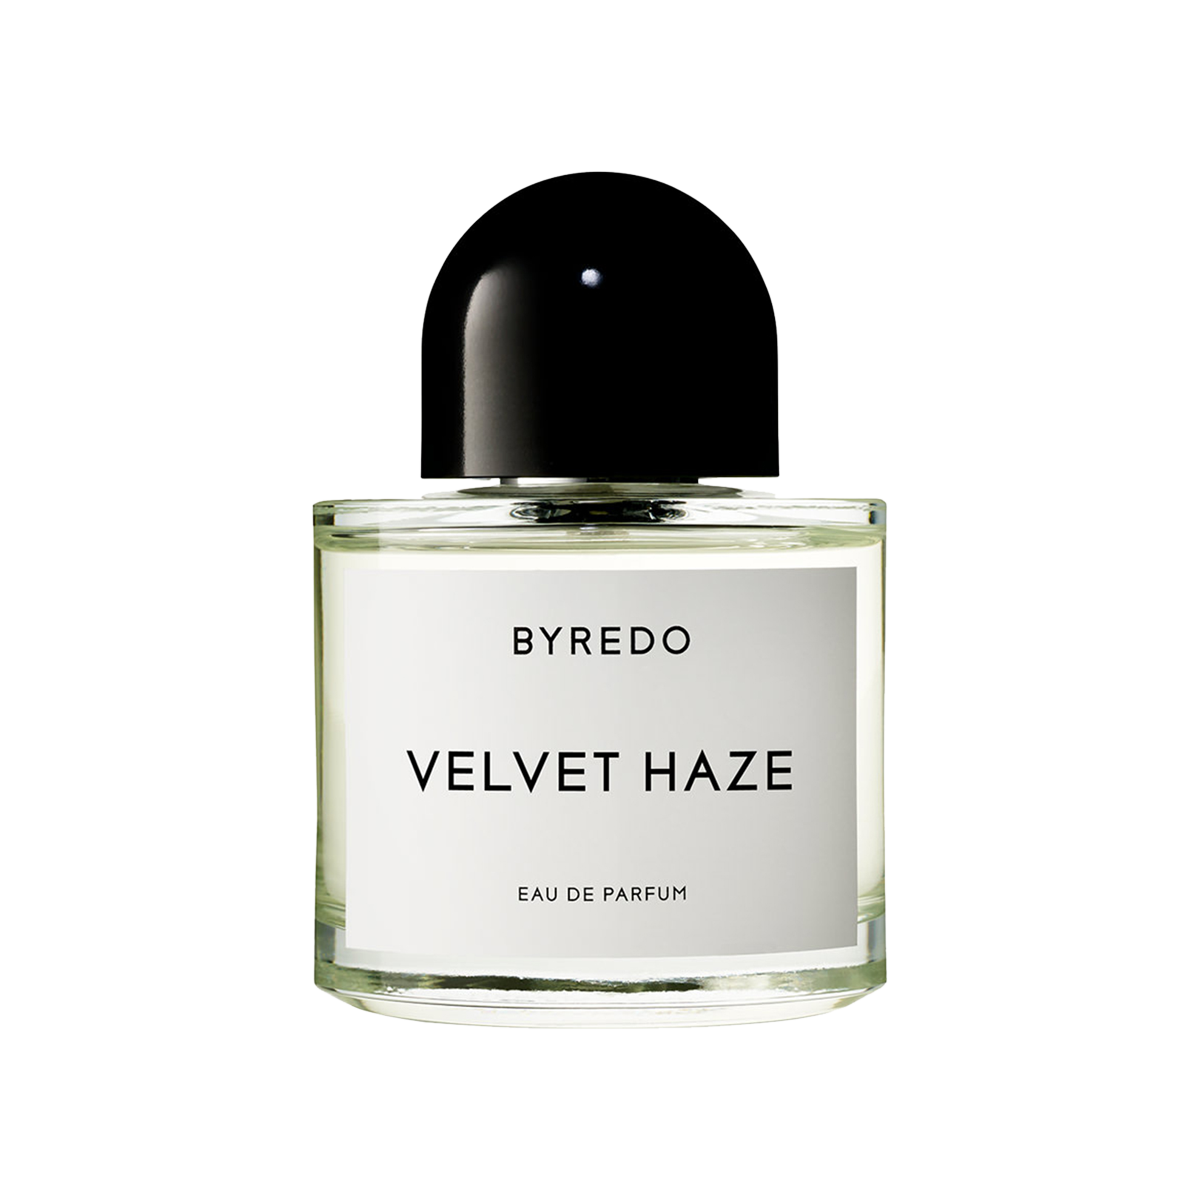 Byredo - Velvet Haze Eau de Parfum